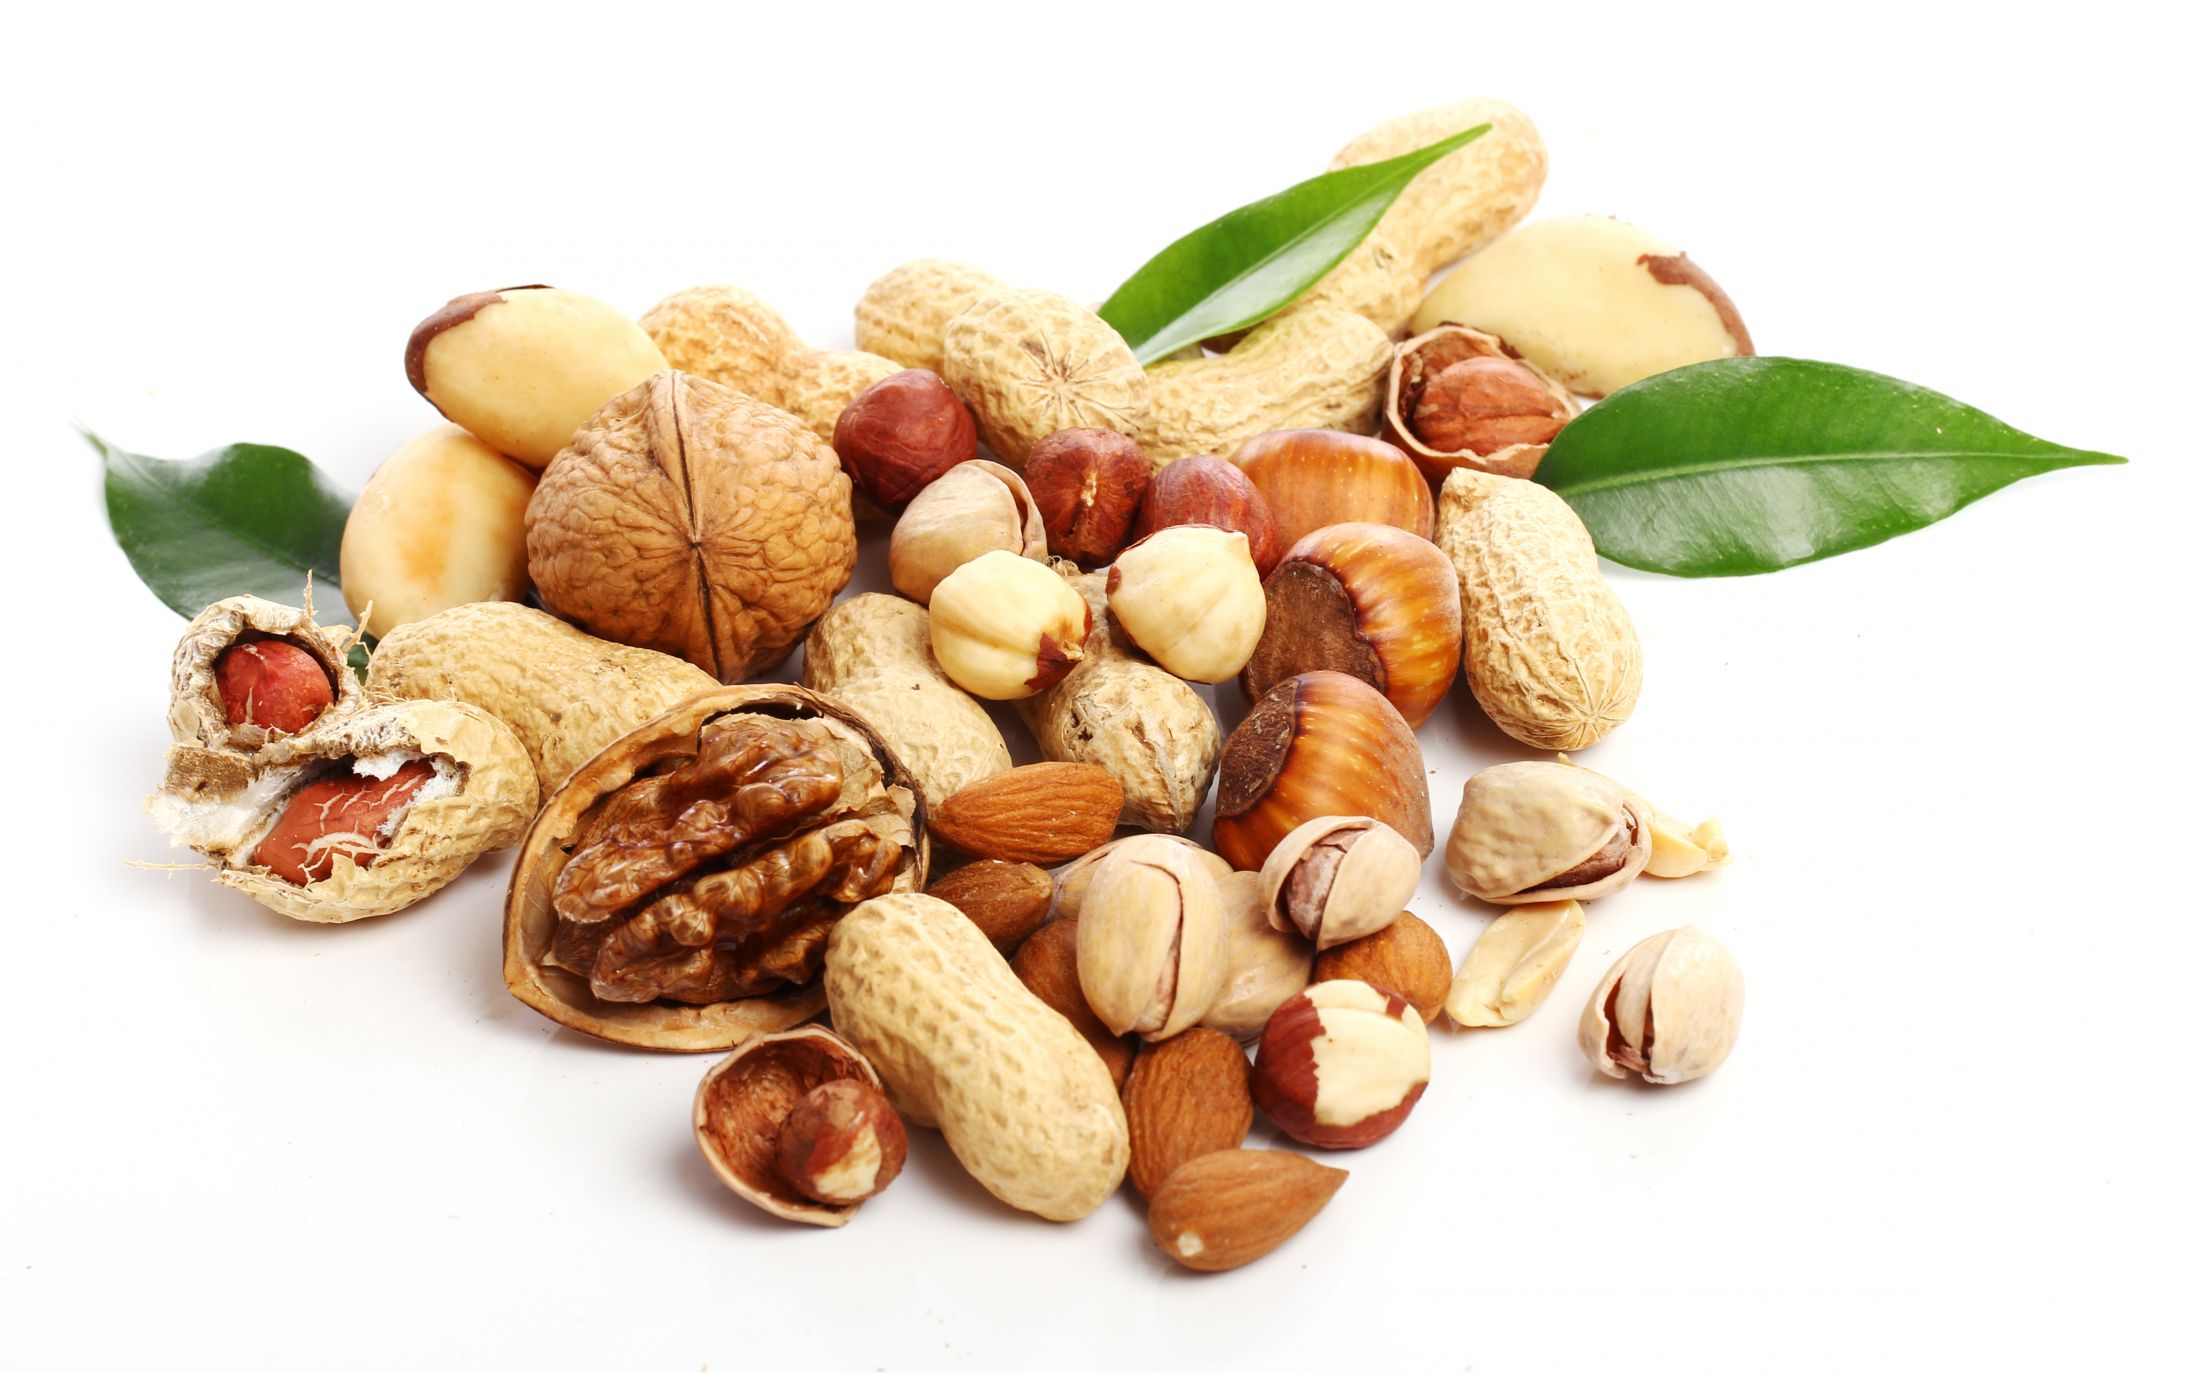 nuts-walnut-peanuts-and-almond-seeds.jpg